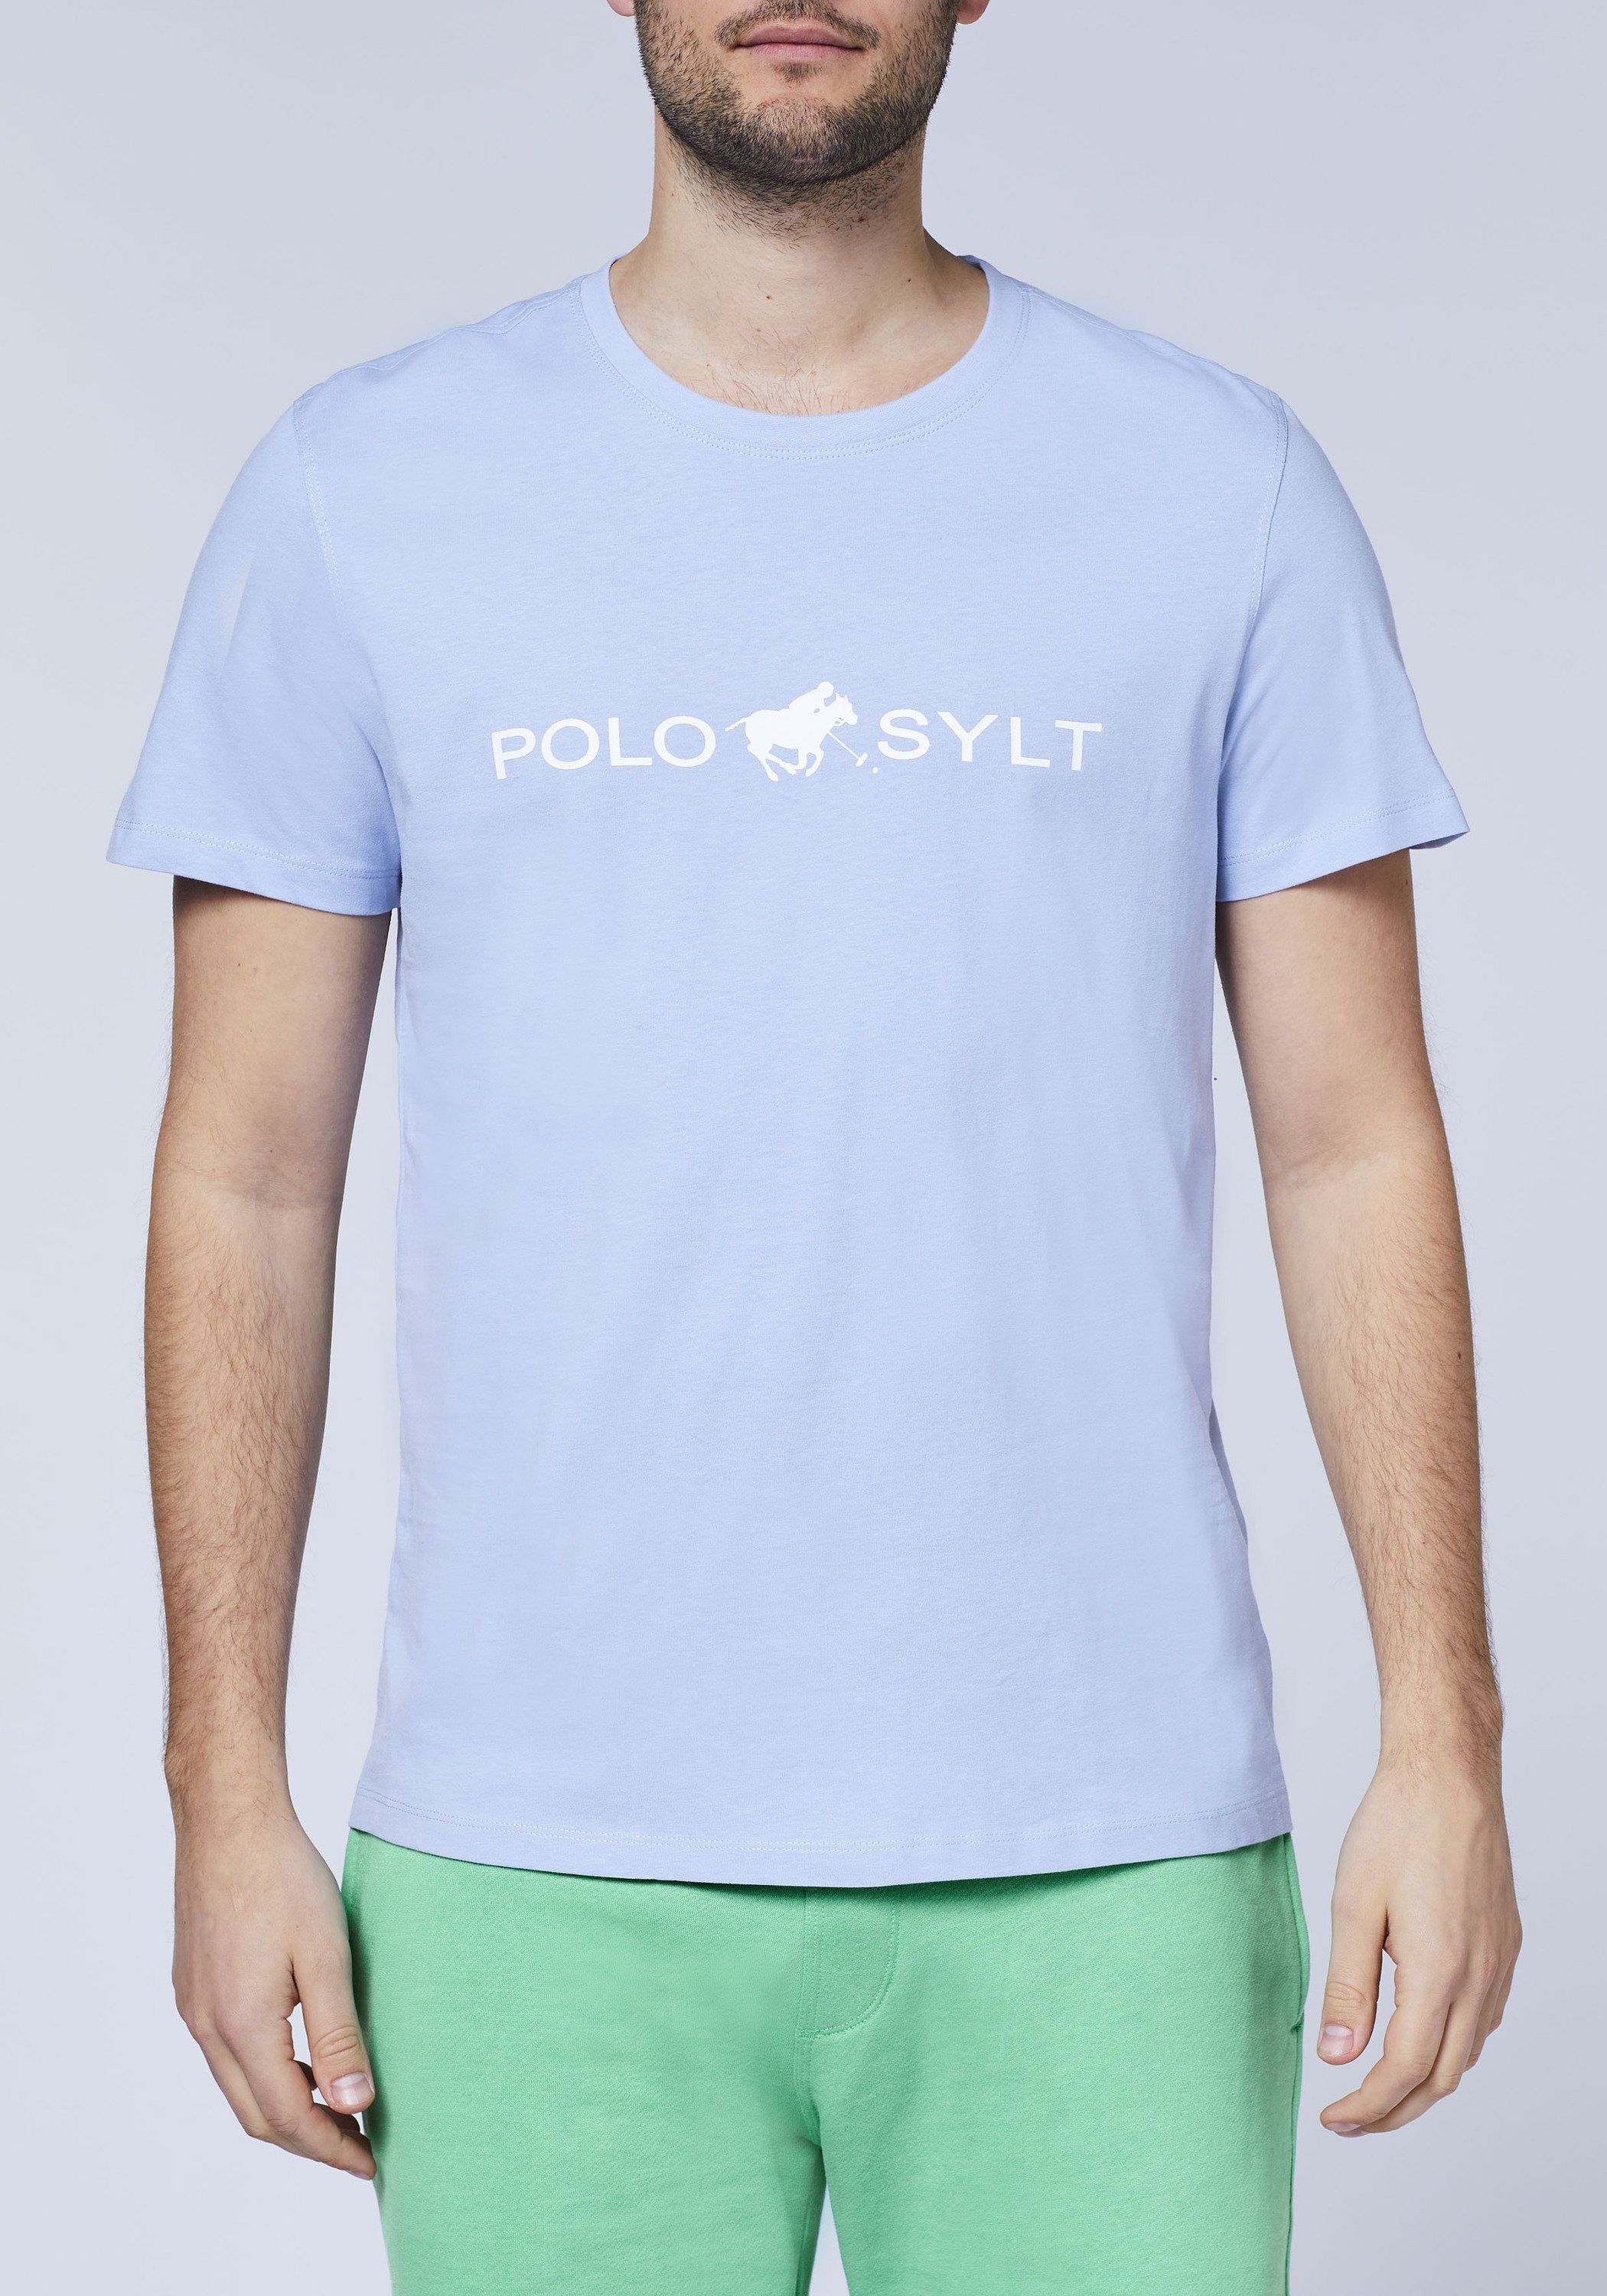 auffälligem Blue 16-3922 Print-Shirt Polo Logo-Print Sylt mit Brunnera